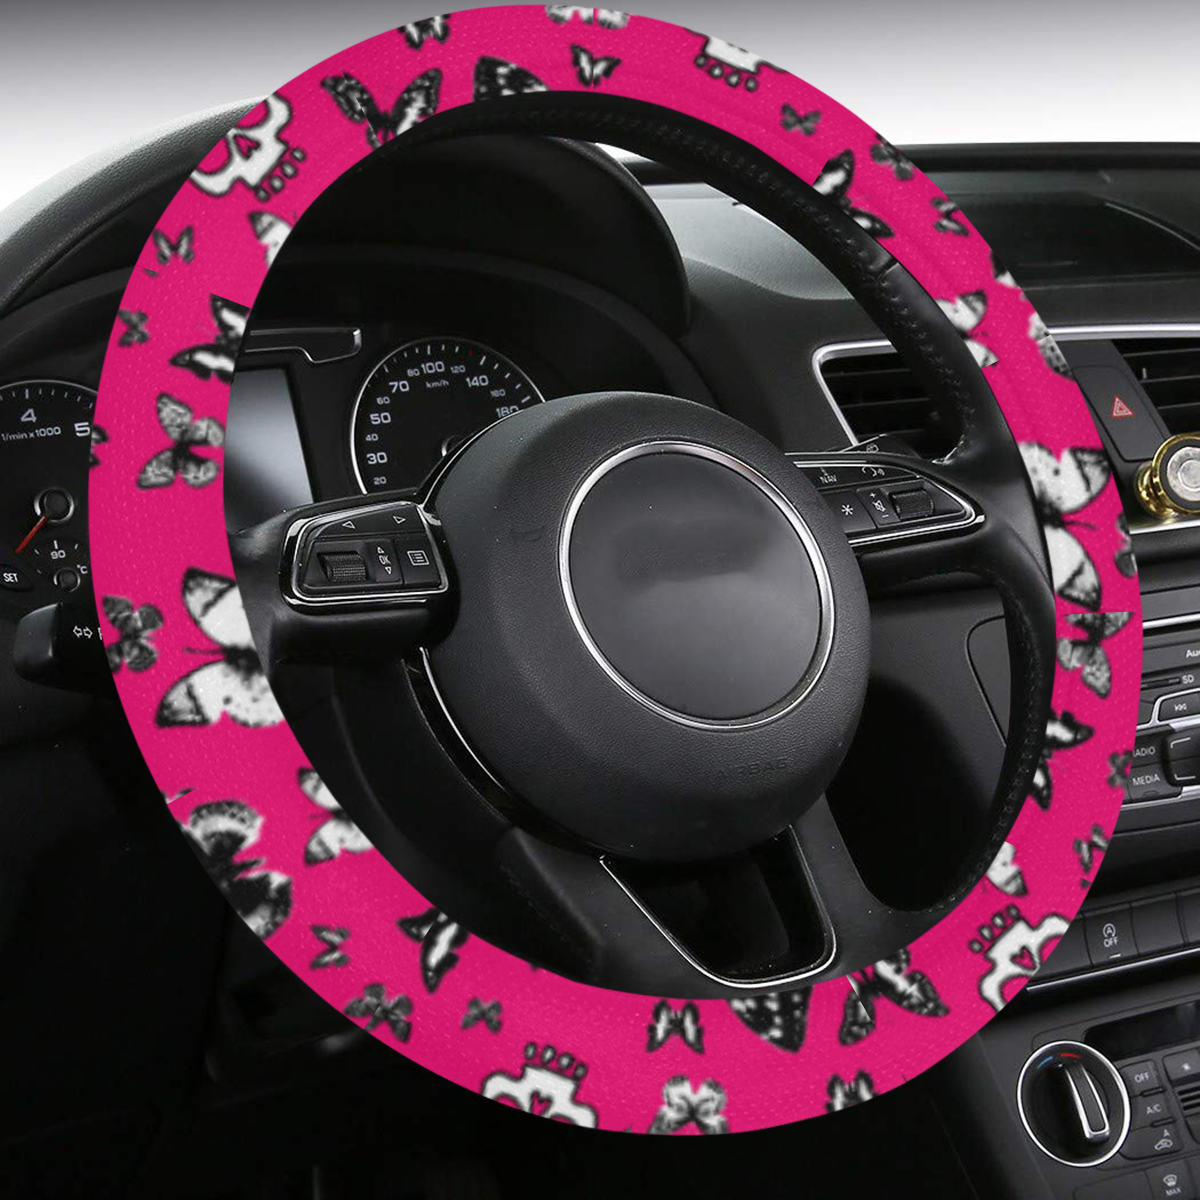 Skulls & butterflies on Pink Steering Wheel Cover with Anti-Slip Insert